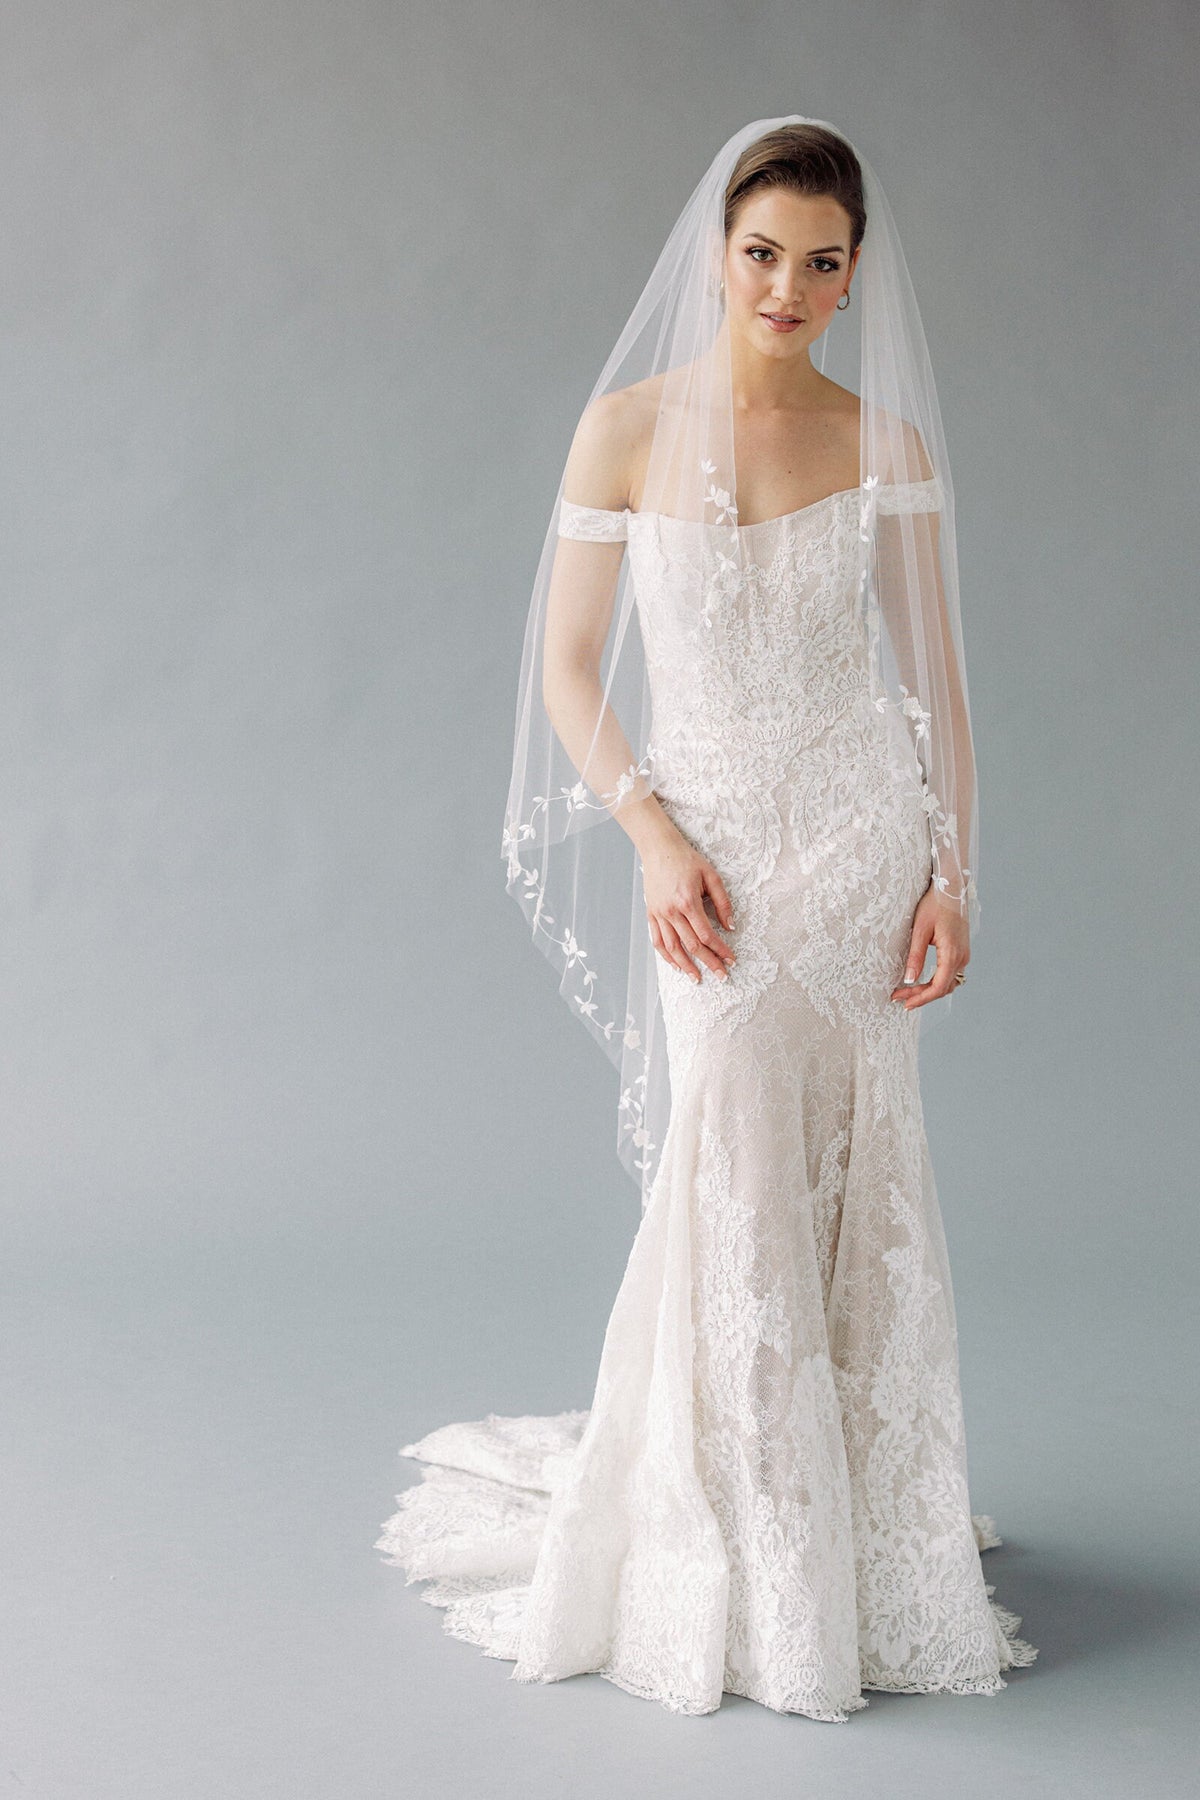 Bridal Veils Embroidered Vine Wedding Veil Waltz Length Lace Edge Sparkle